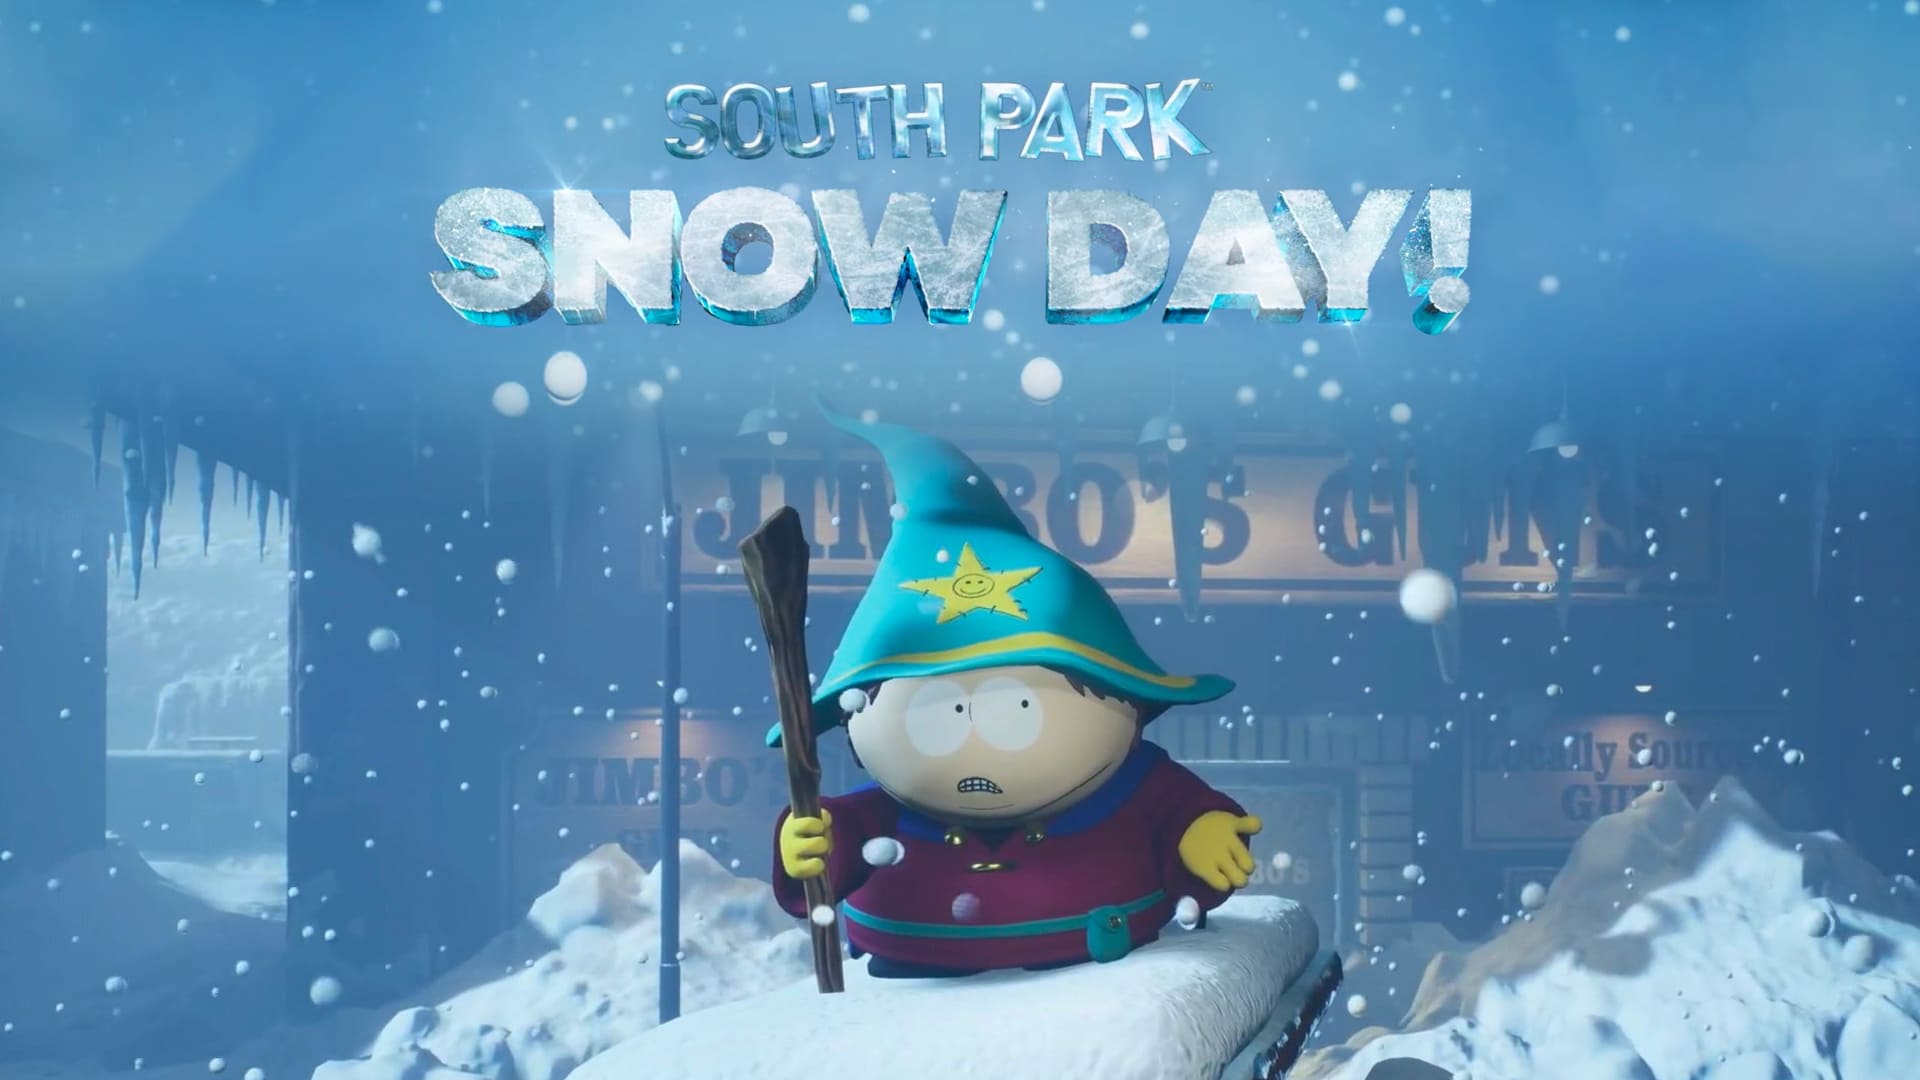 SOUTH-PARK-SNOW-DAY!